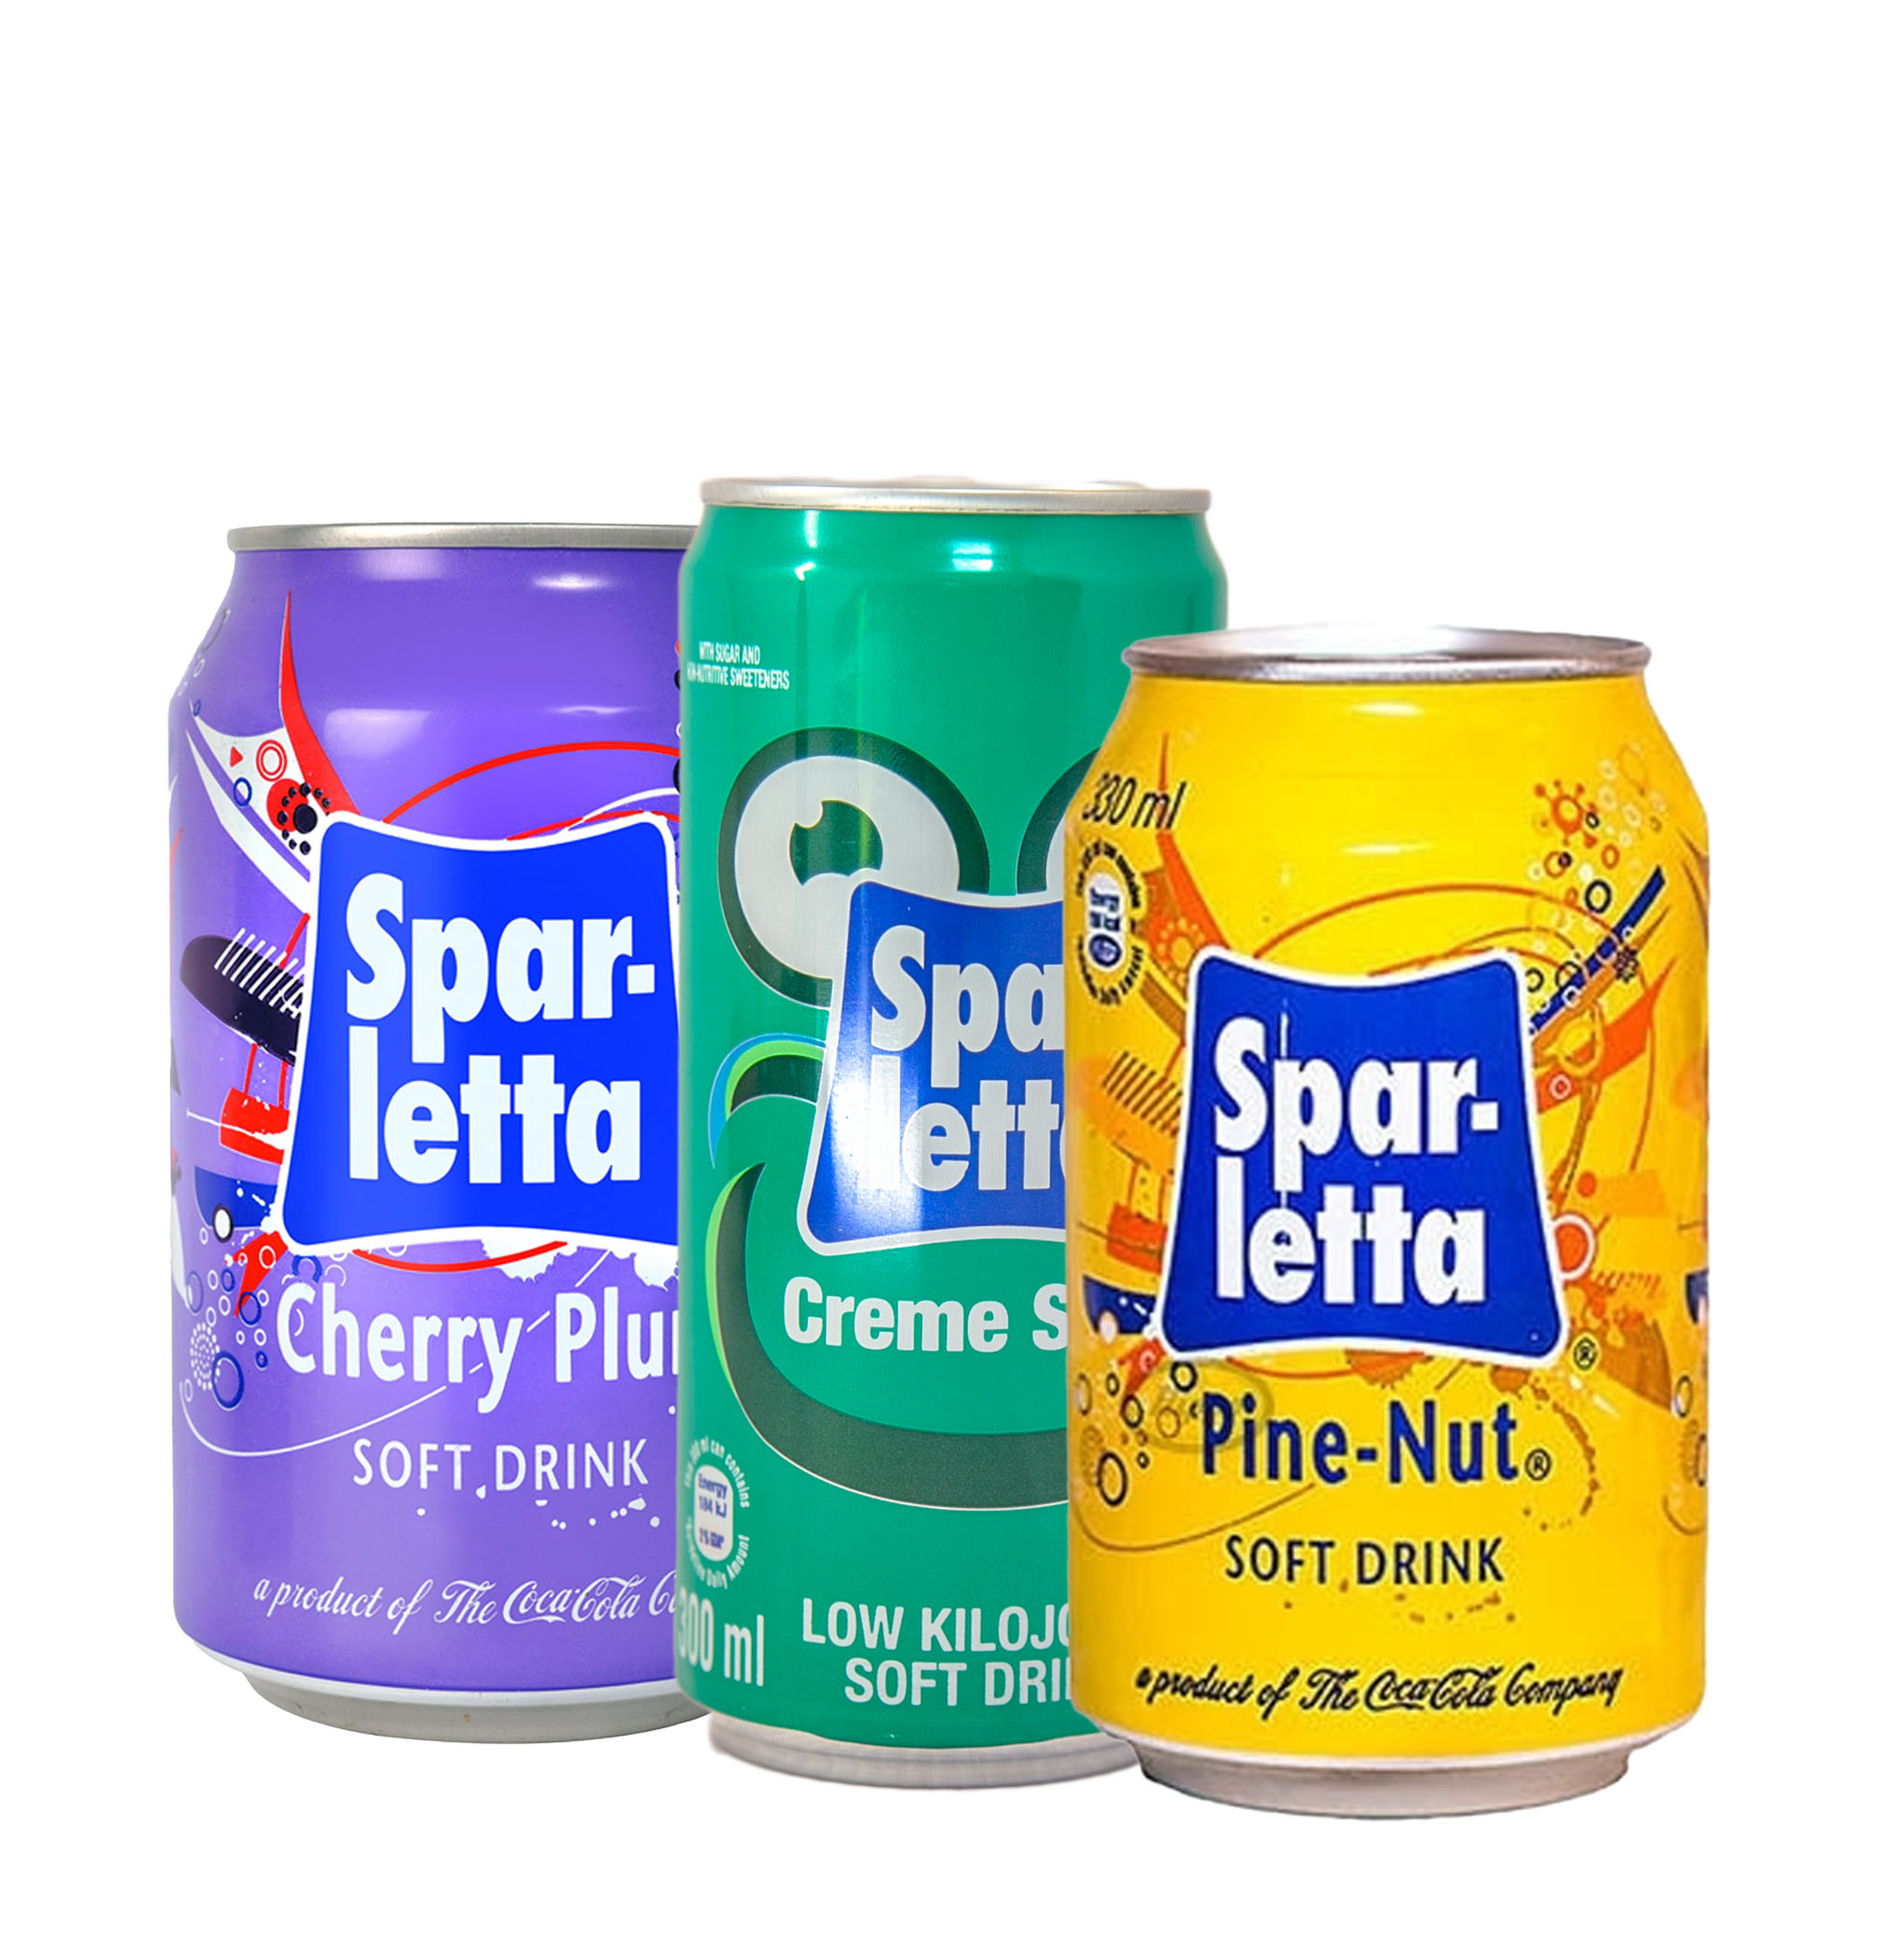 sparletta-drink cans